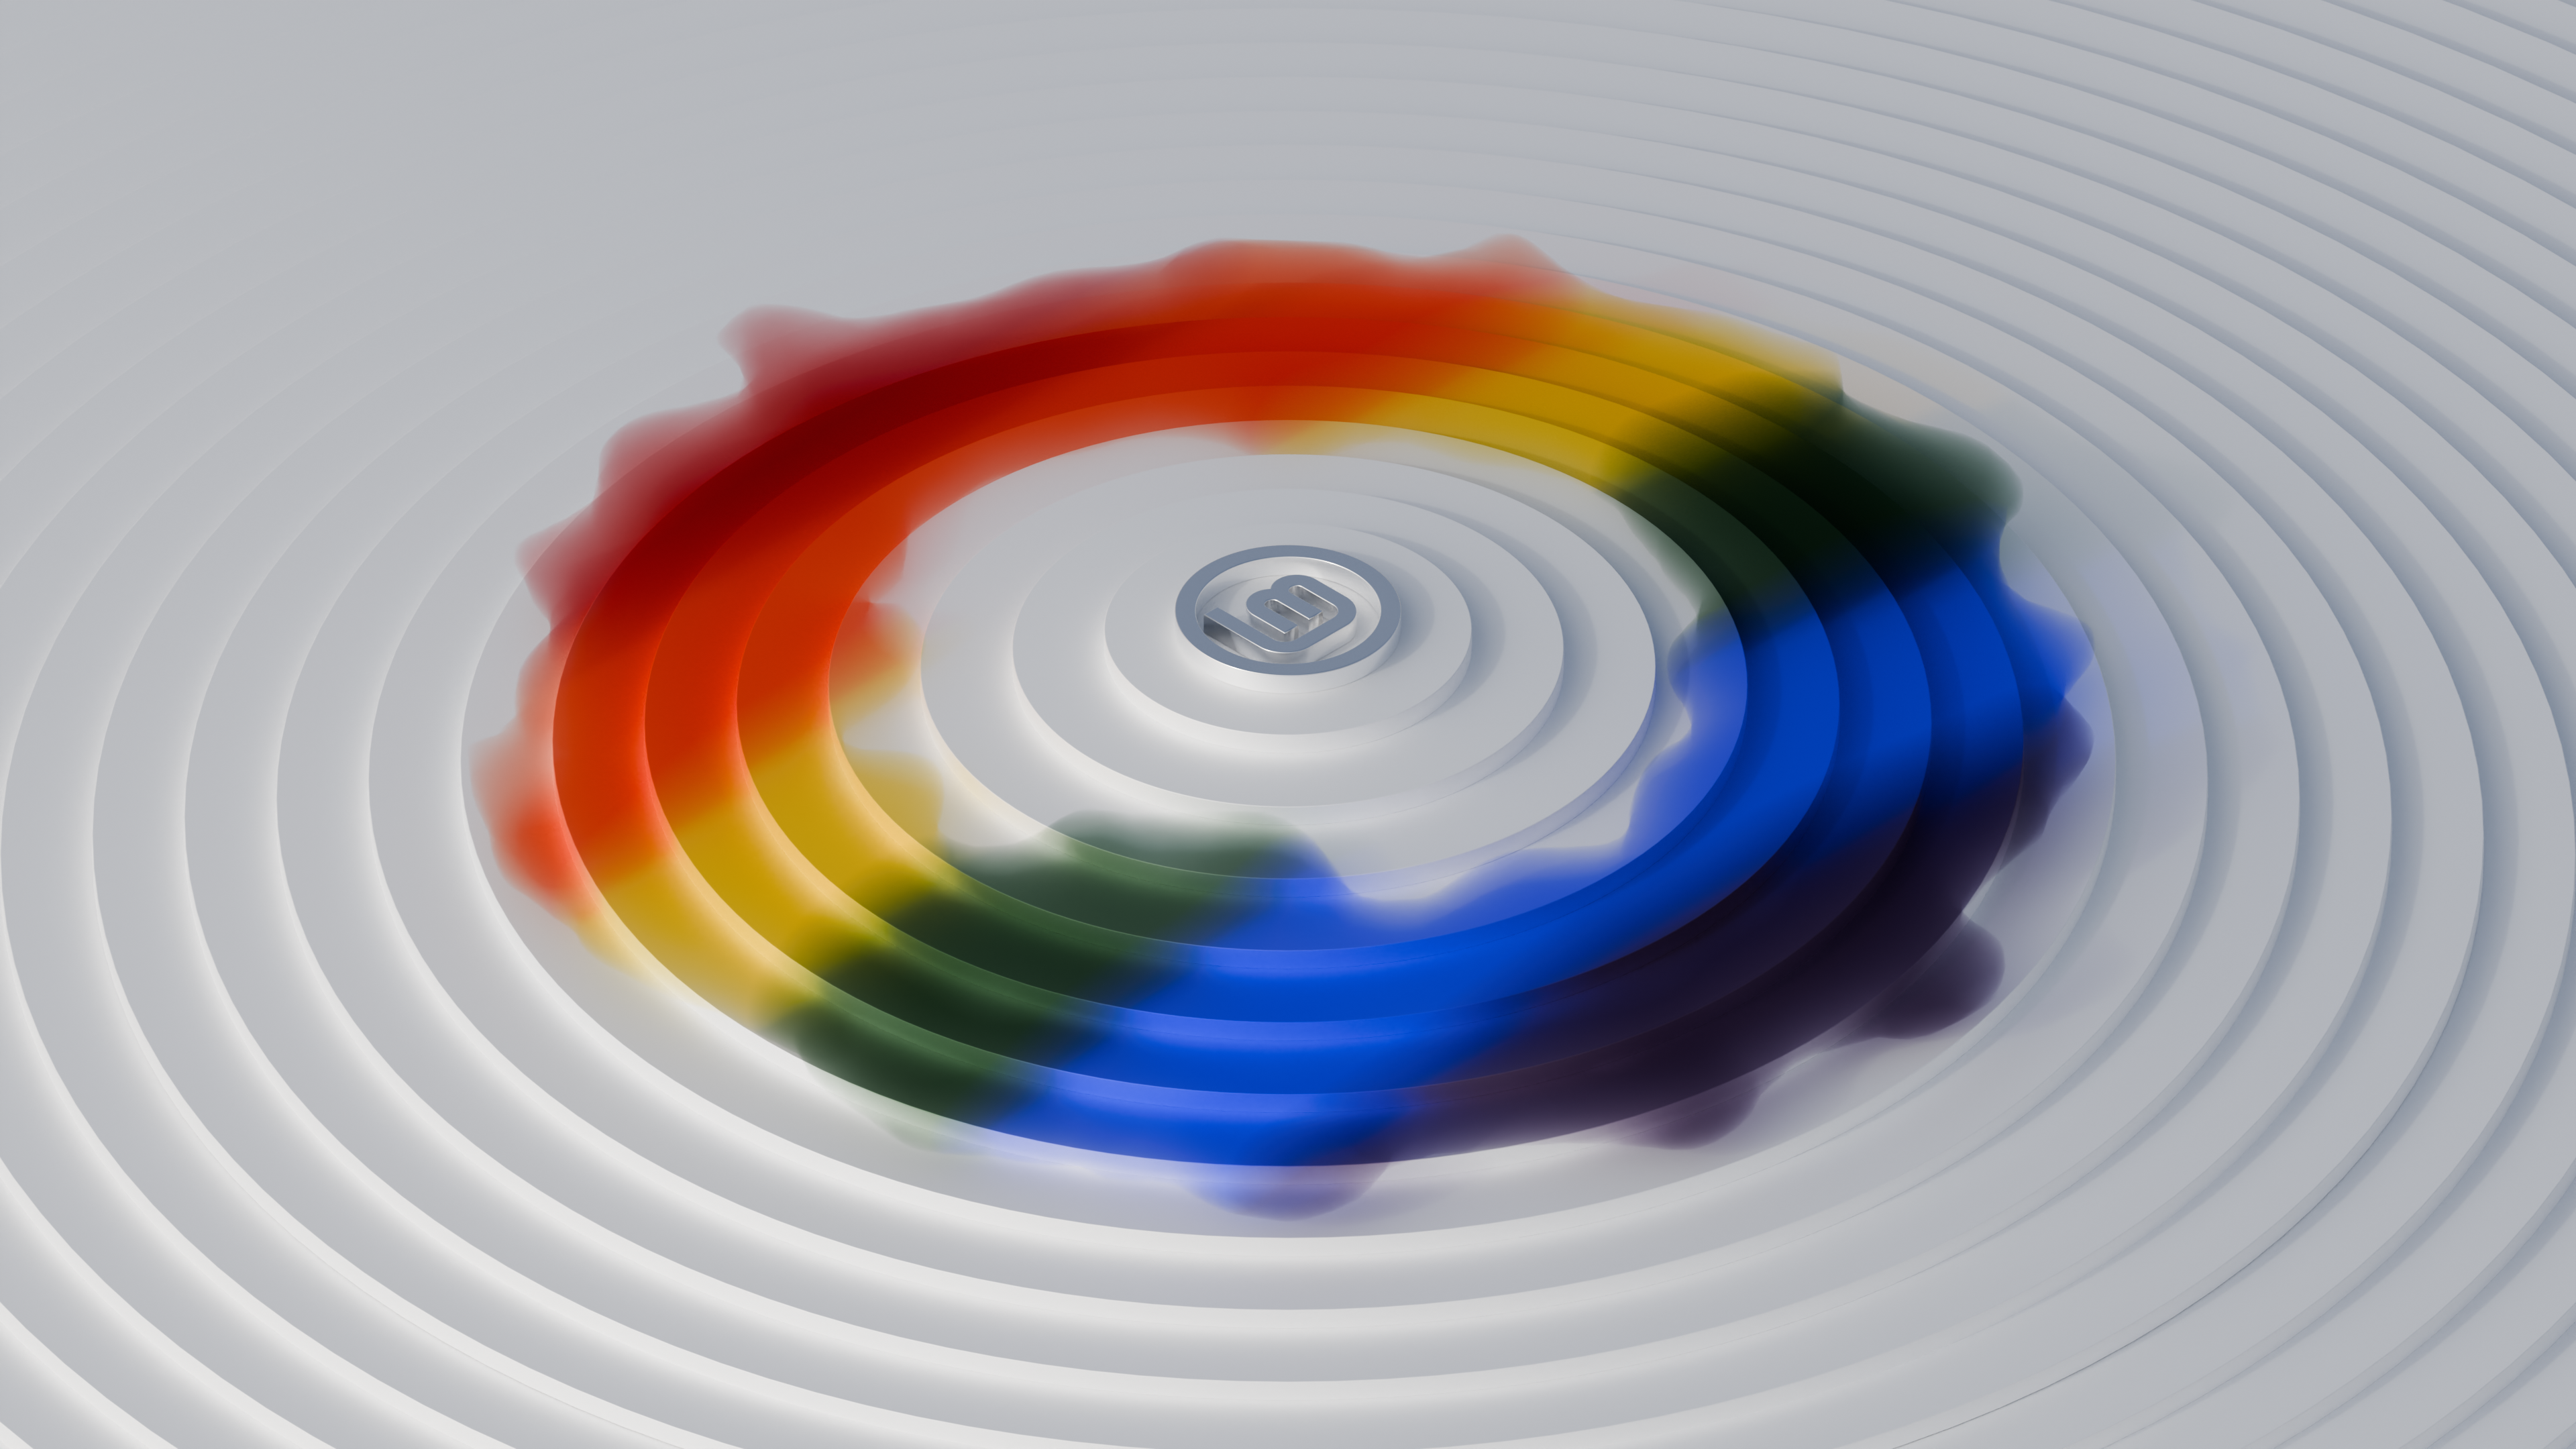 General 3840x2160 Linux Mint Linux pride flag pride colorful LGBTI gay culture Blender digital art